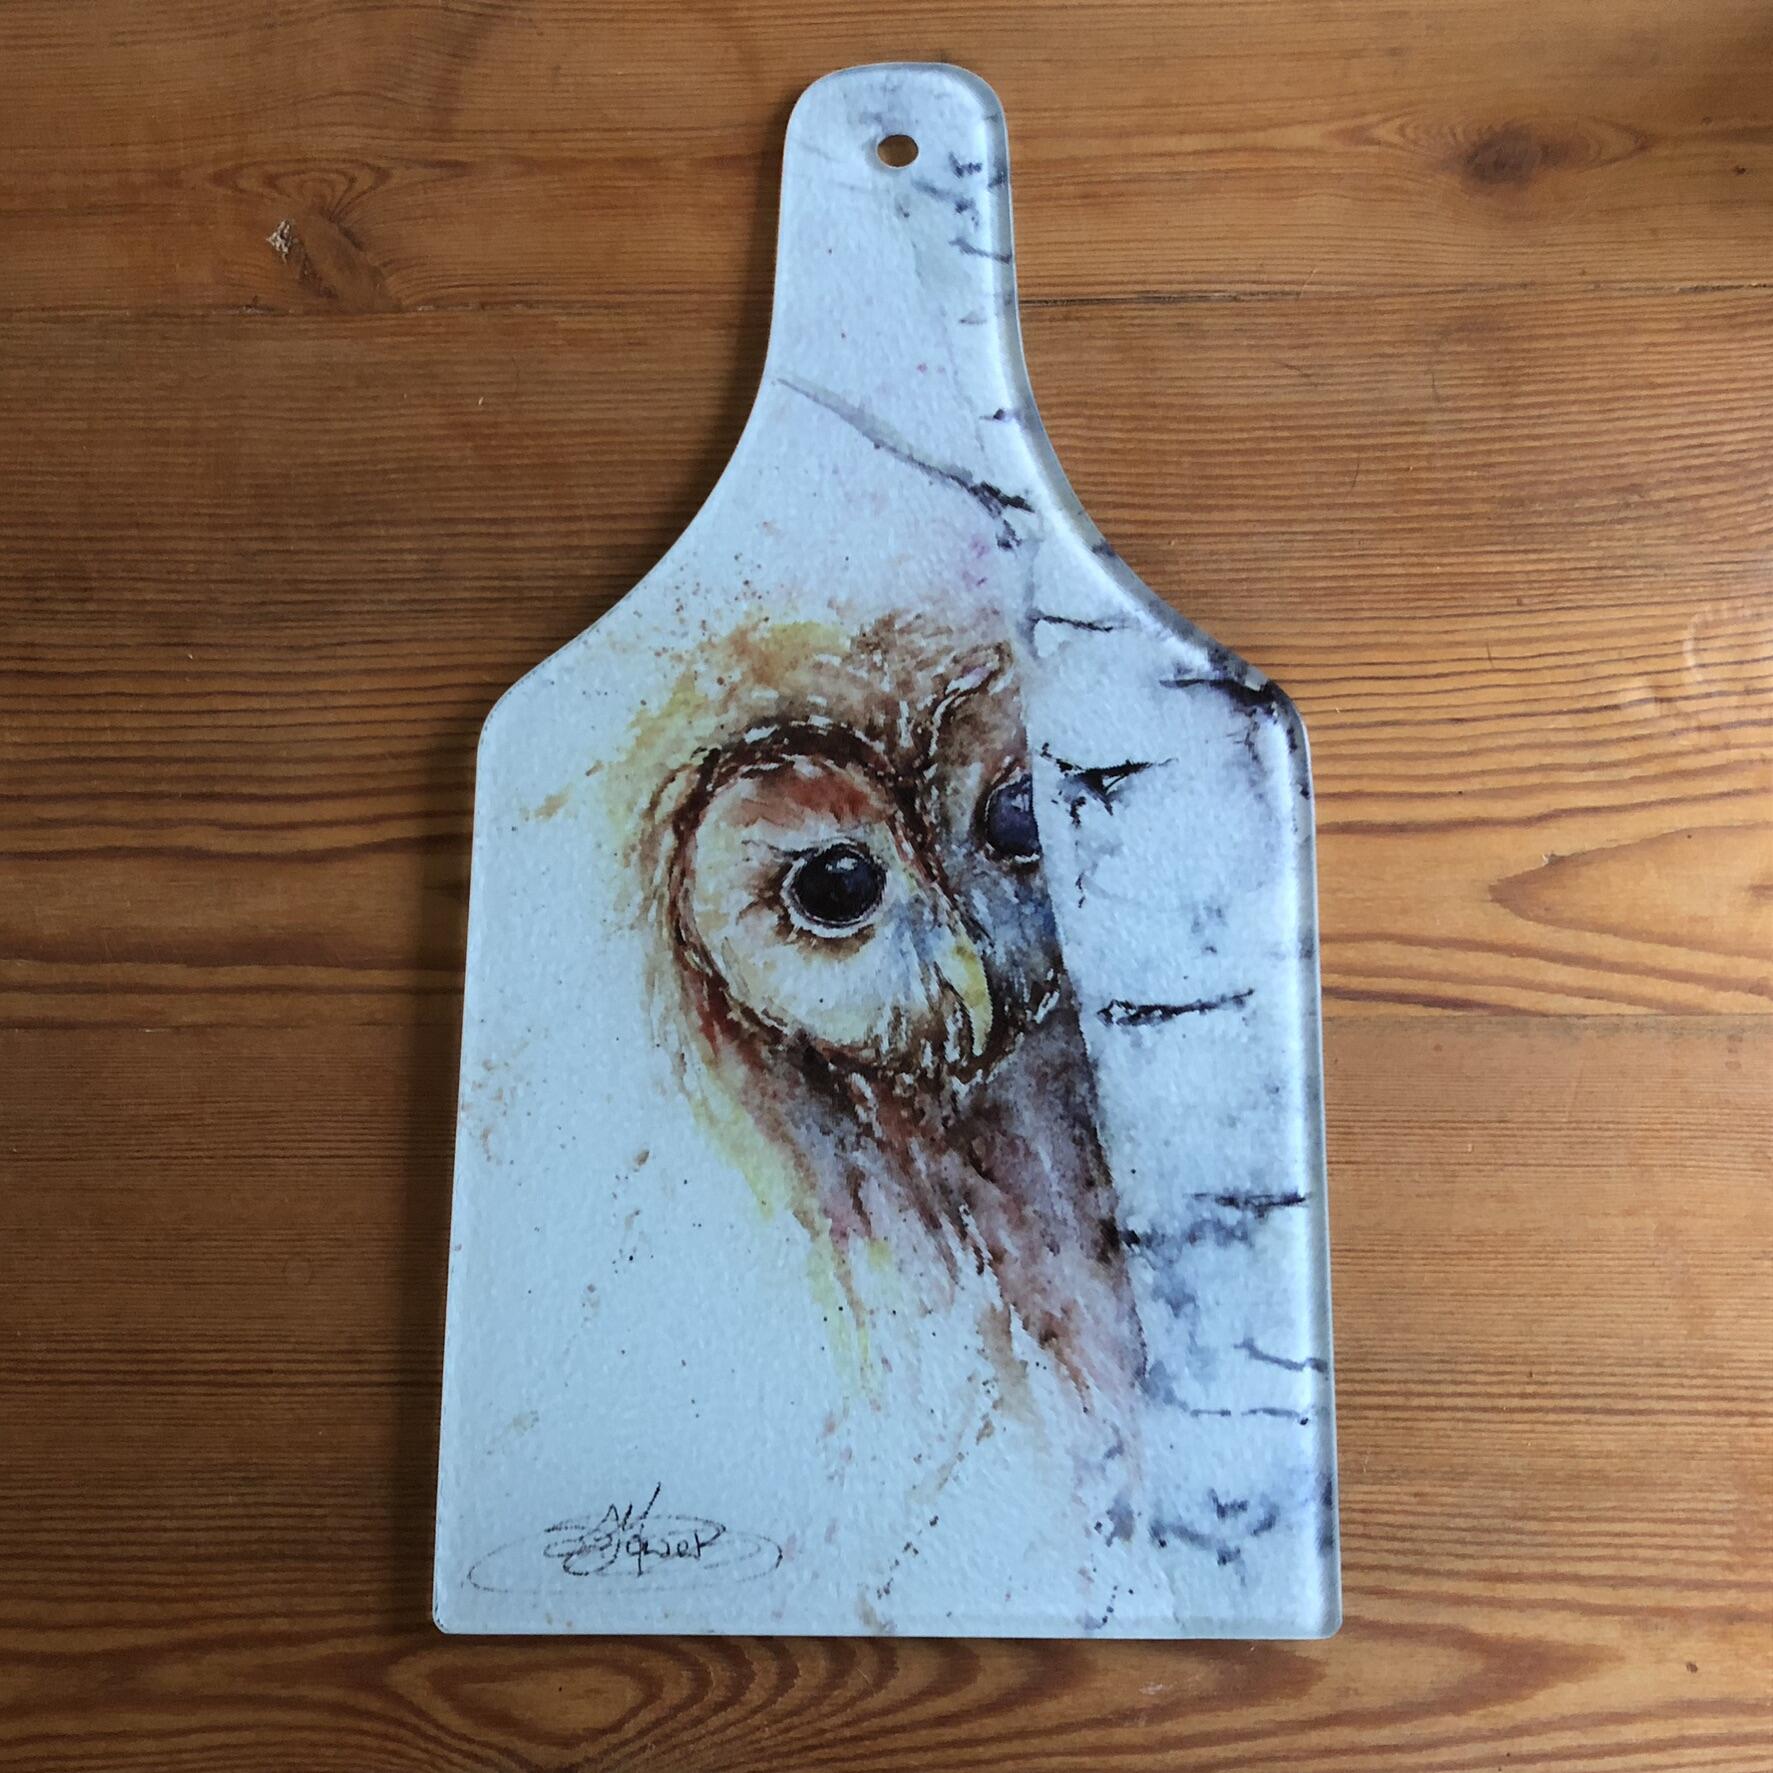 tawny owl and birch tree design